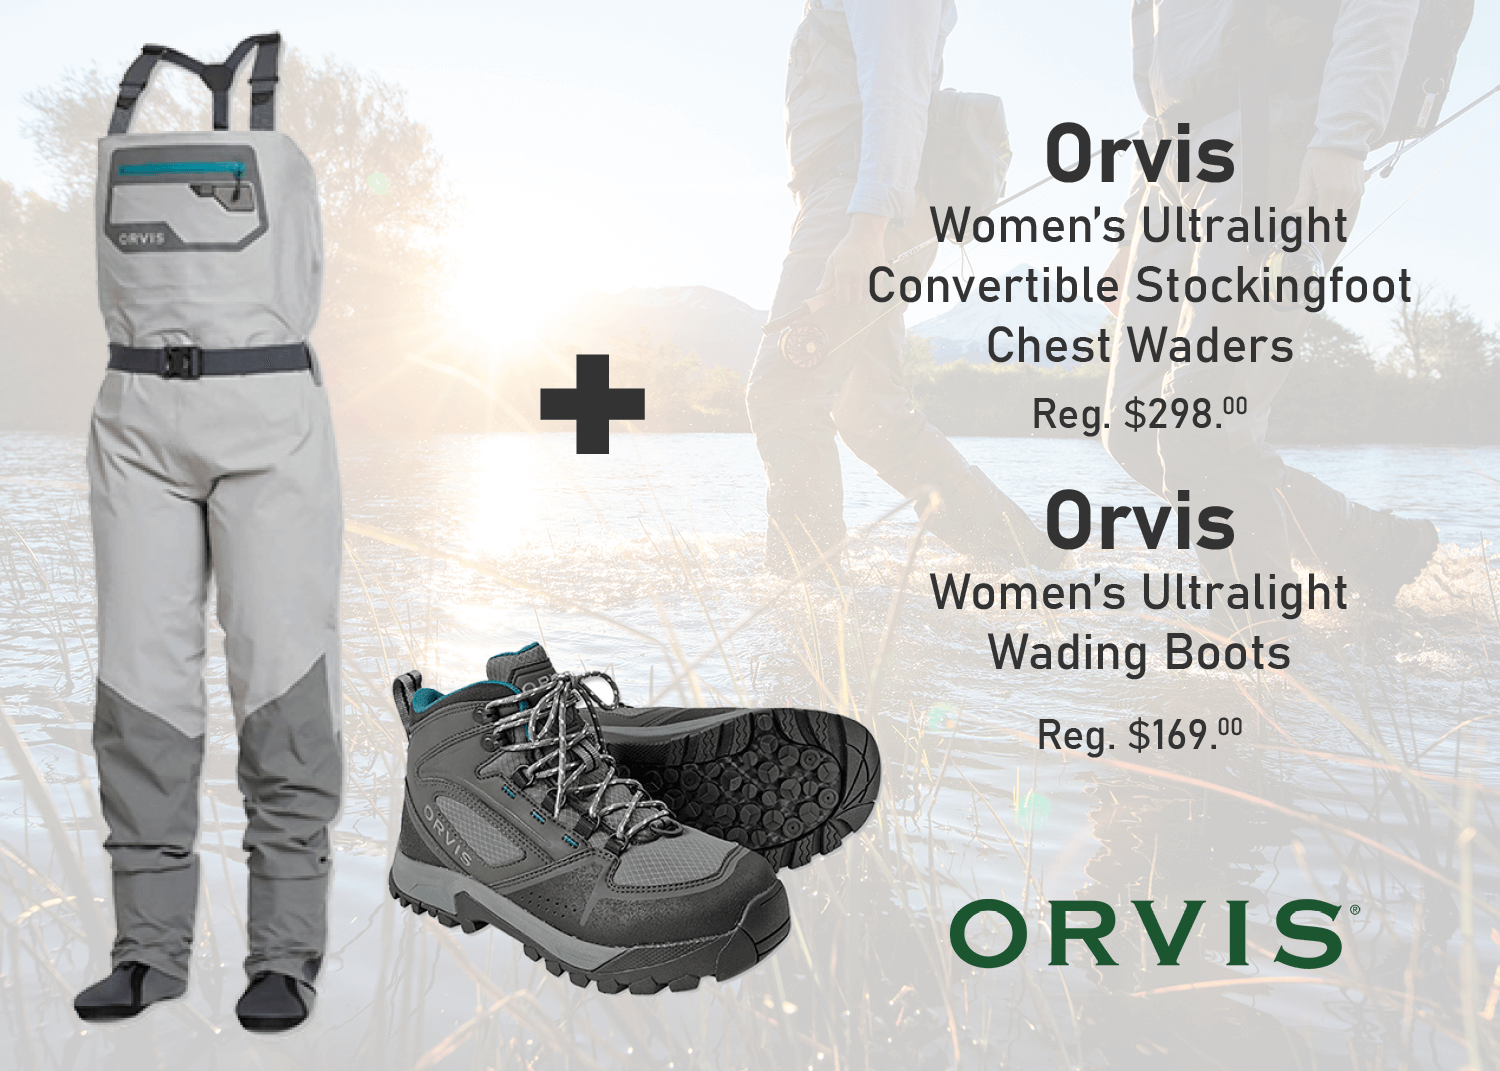 Orvis Women's Ultralight Convertible Stockingfoot Chest Waders + Orvis Women's Ultralight Wading Boots 